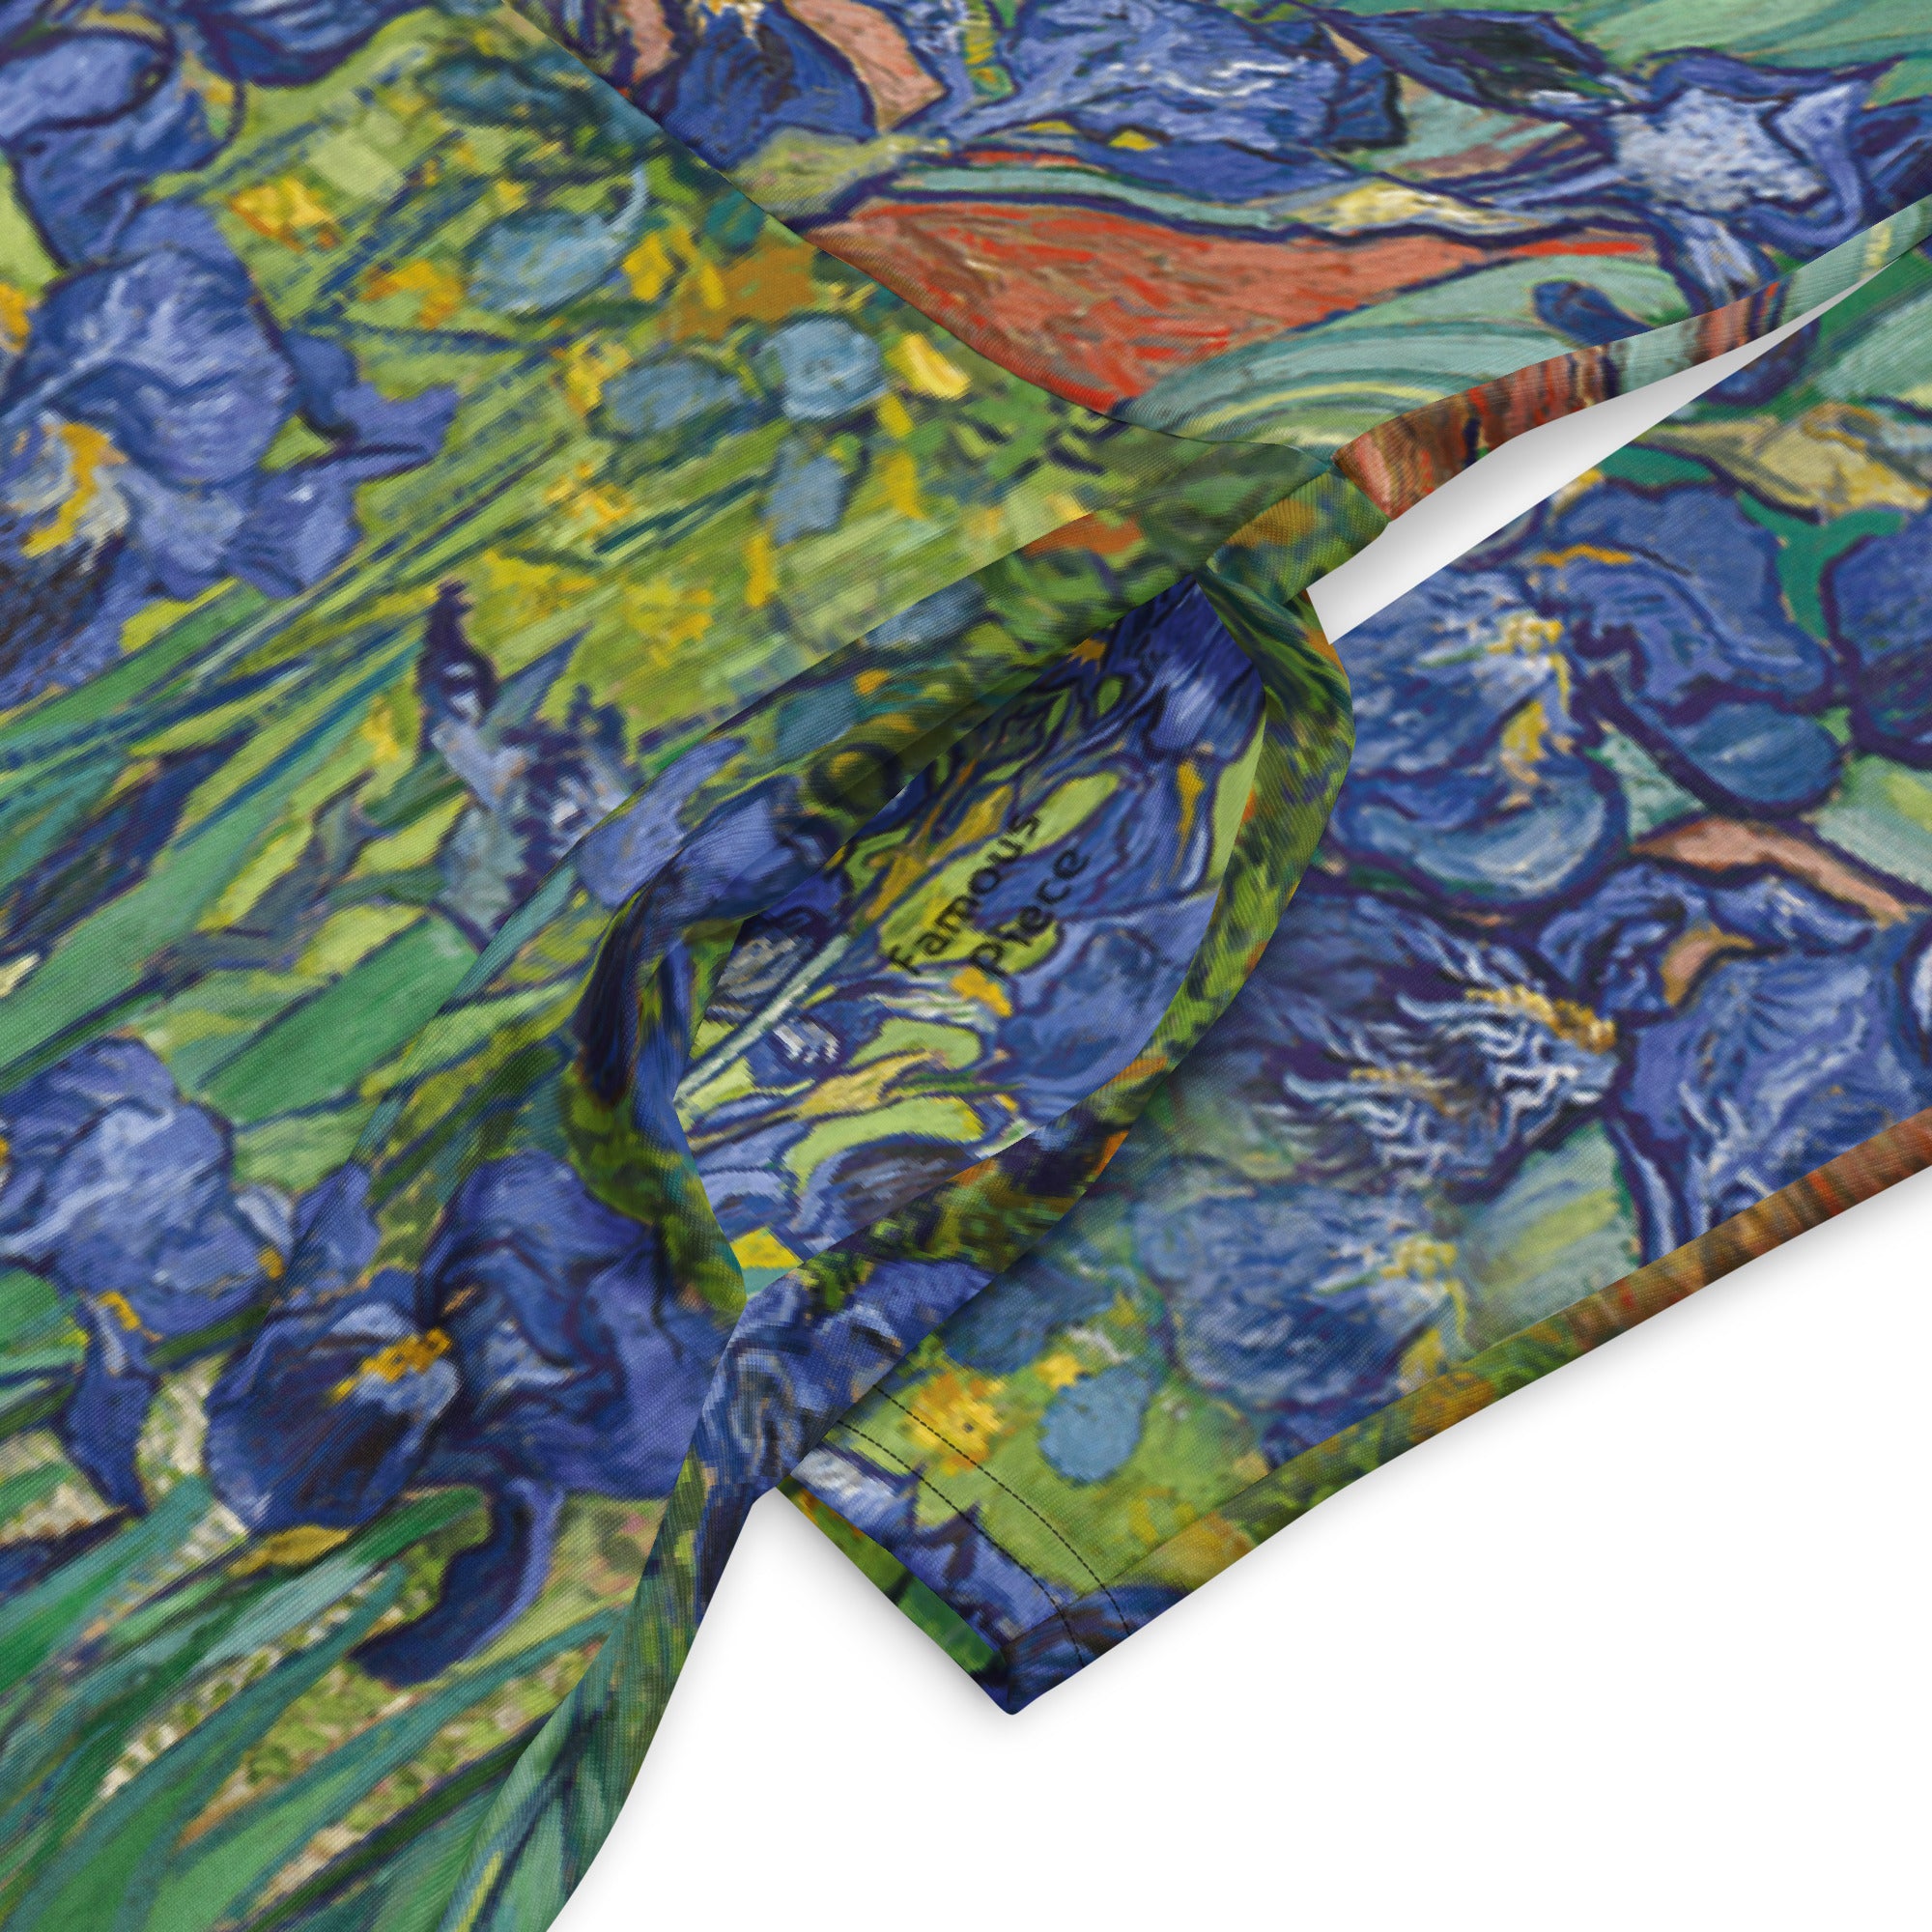 Vincent van Gogh 'Irises' Famous Painting Long Sleeve Midi Dress | Premium Art Midi Dress